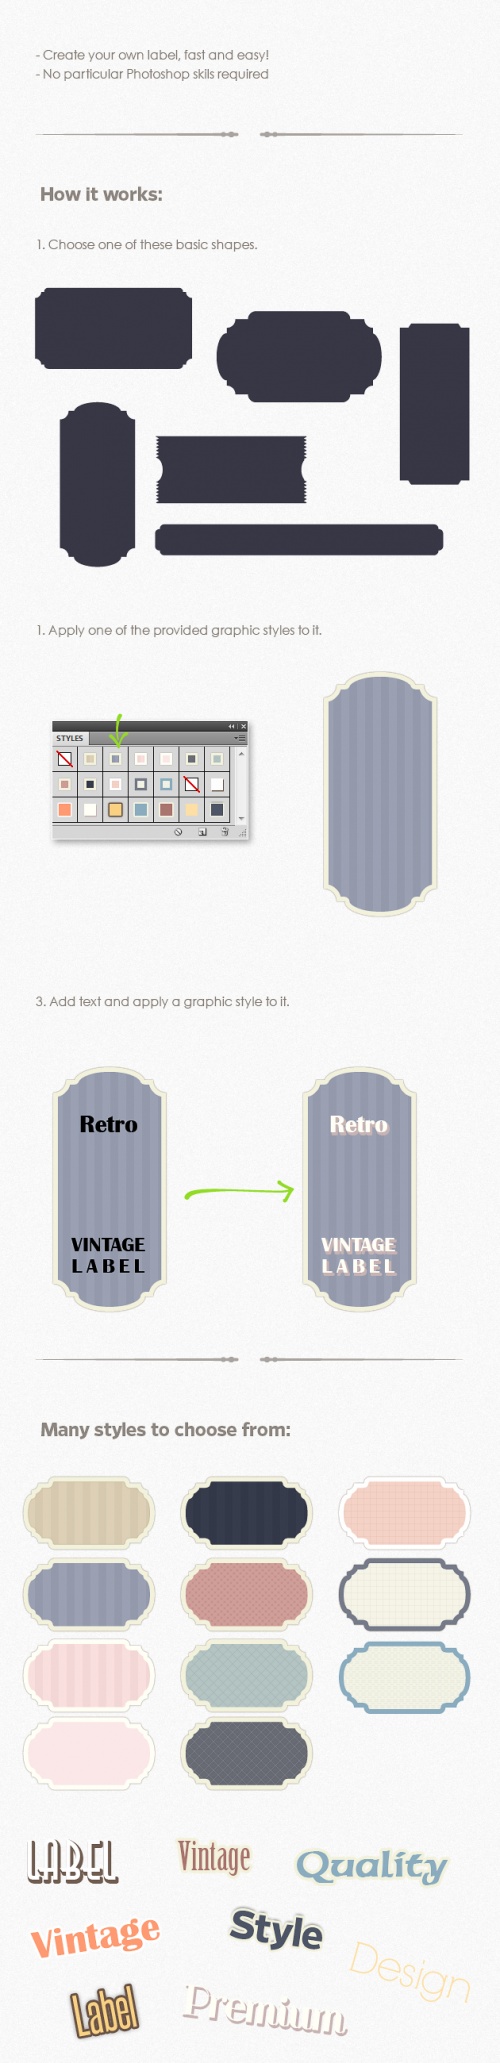 Designtnt - Retro Vintage Labels PS Generator